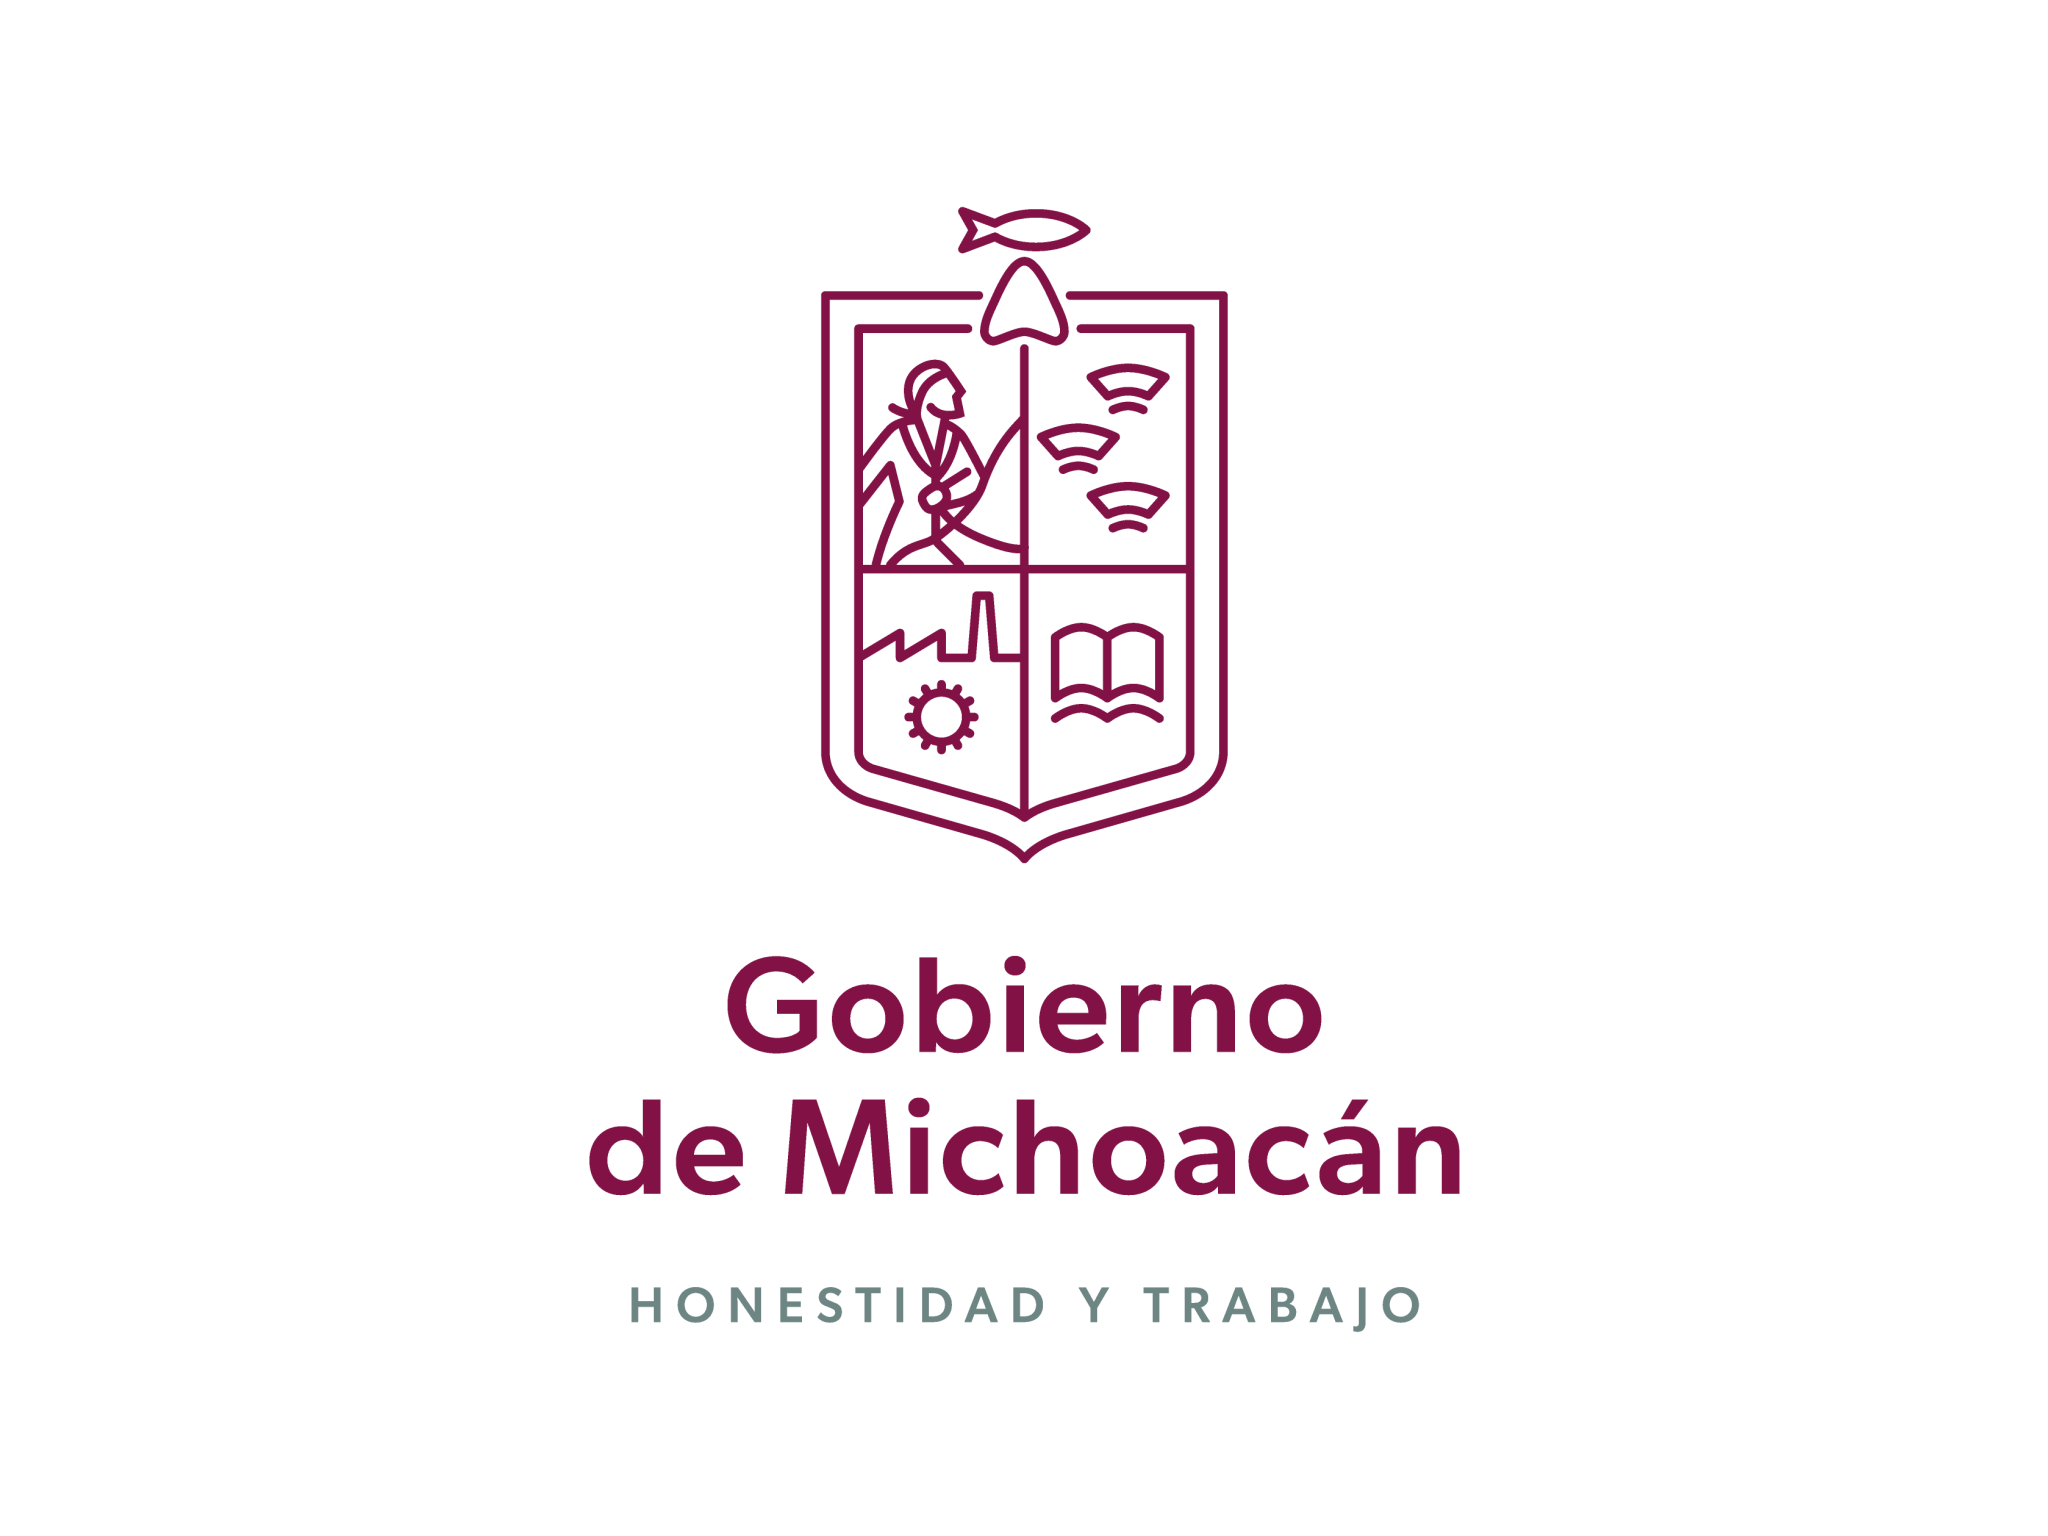 Download Gobierno de Michoacán Logo PNG and Vector (PDF, SVG, Ai, EPS) Free